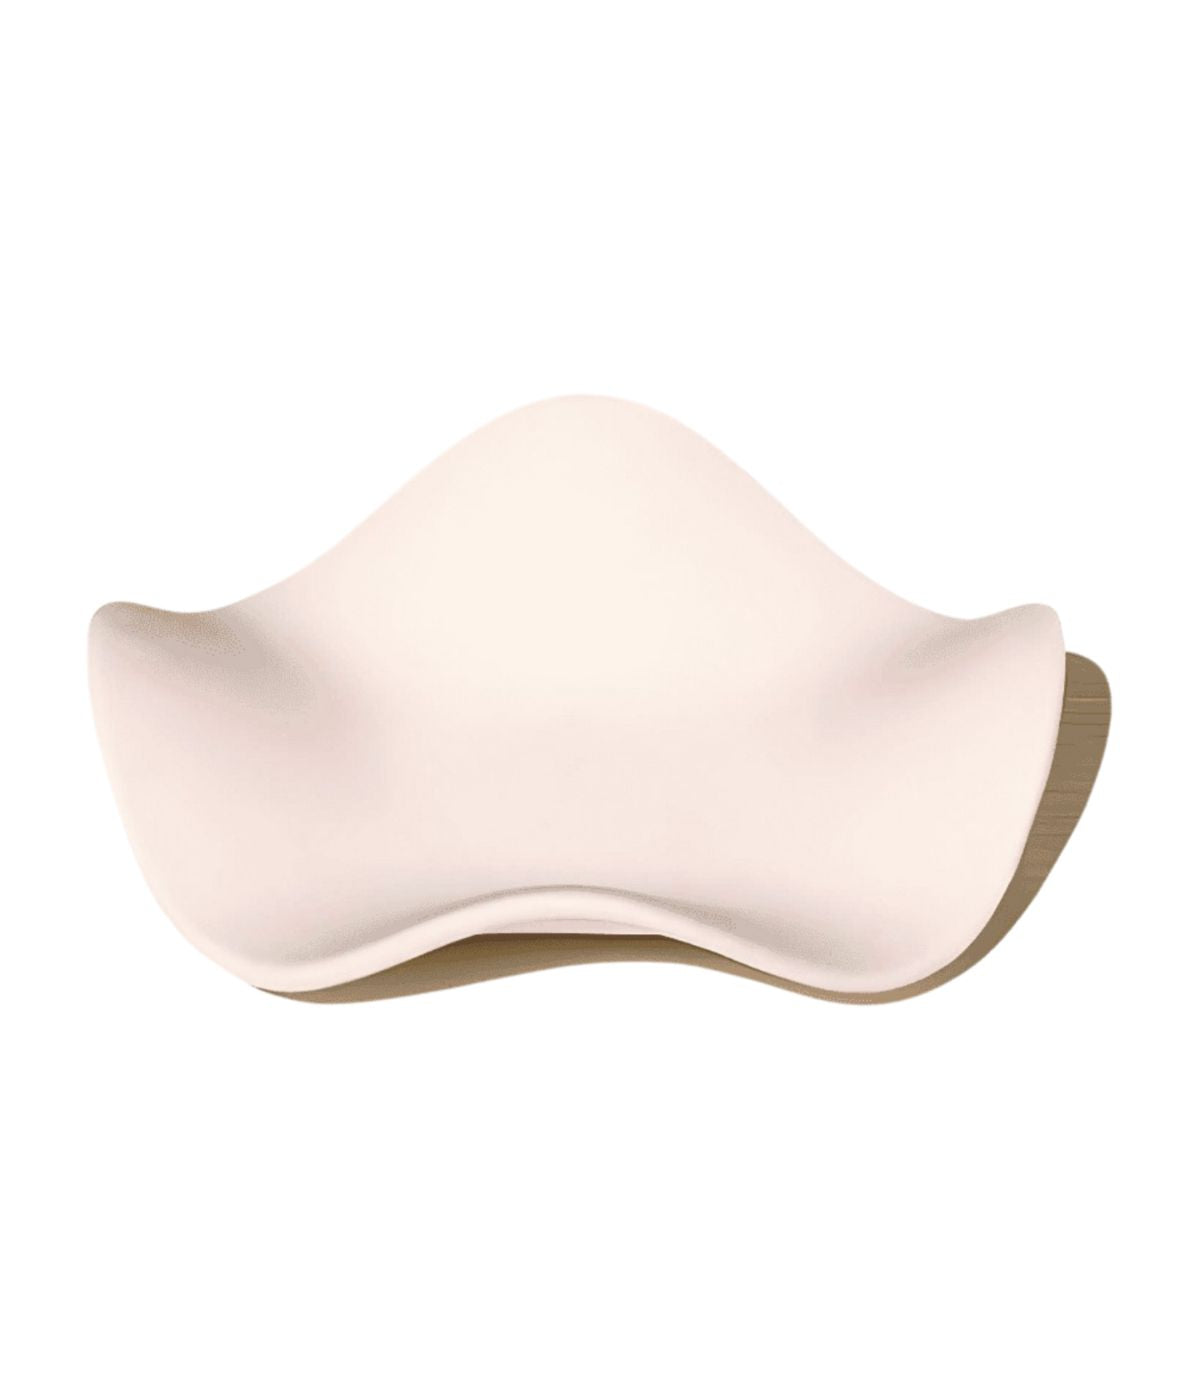 A white, ceramic wave bowl